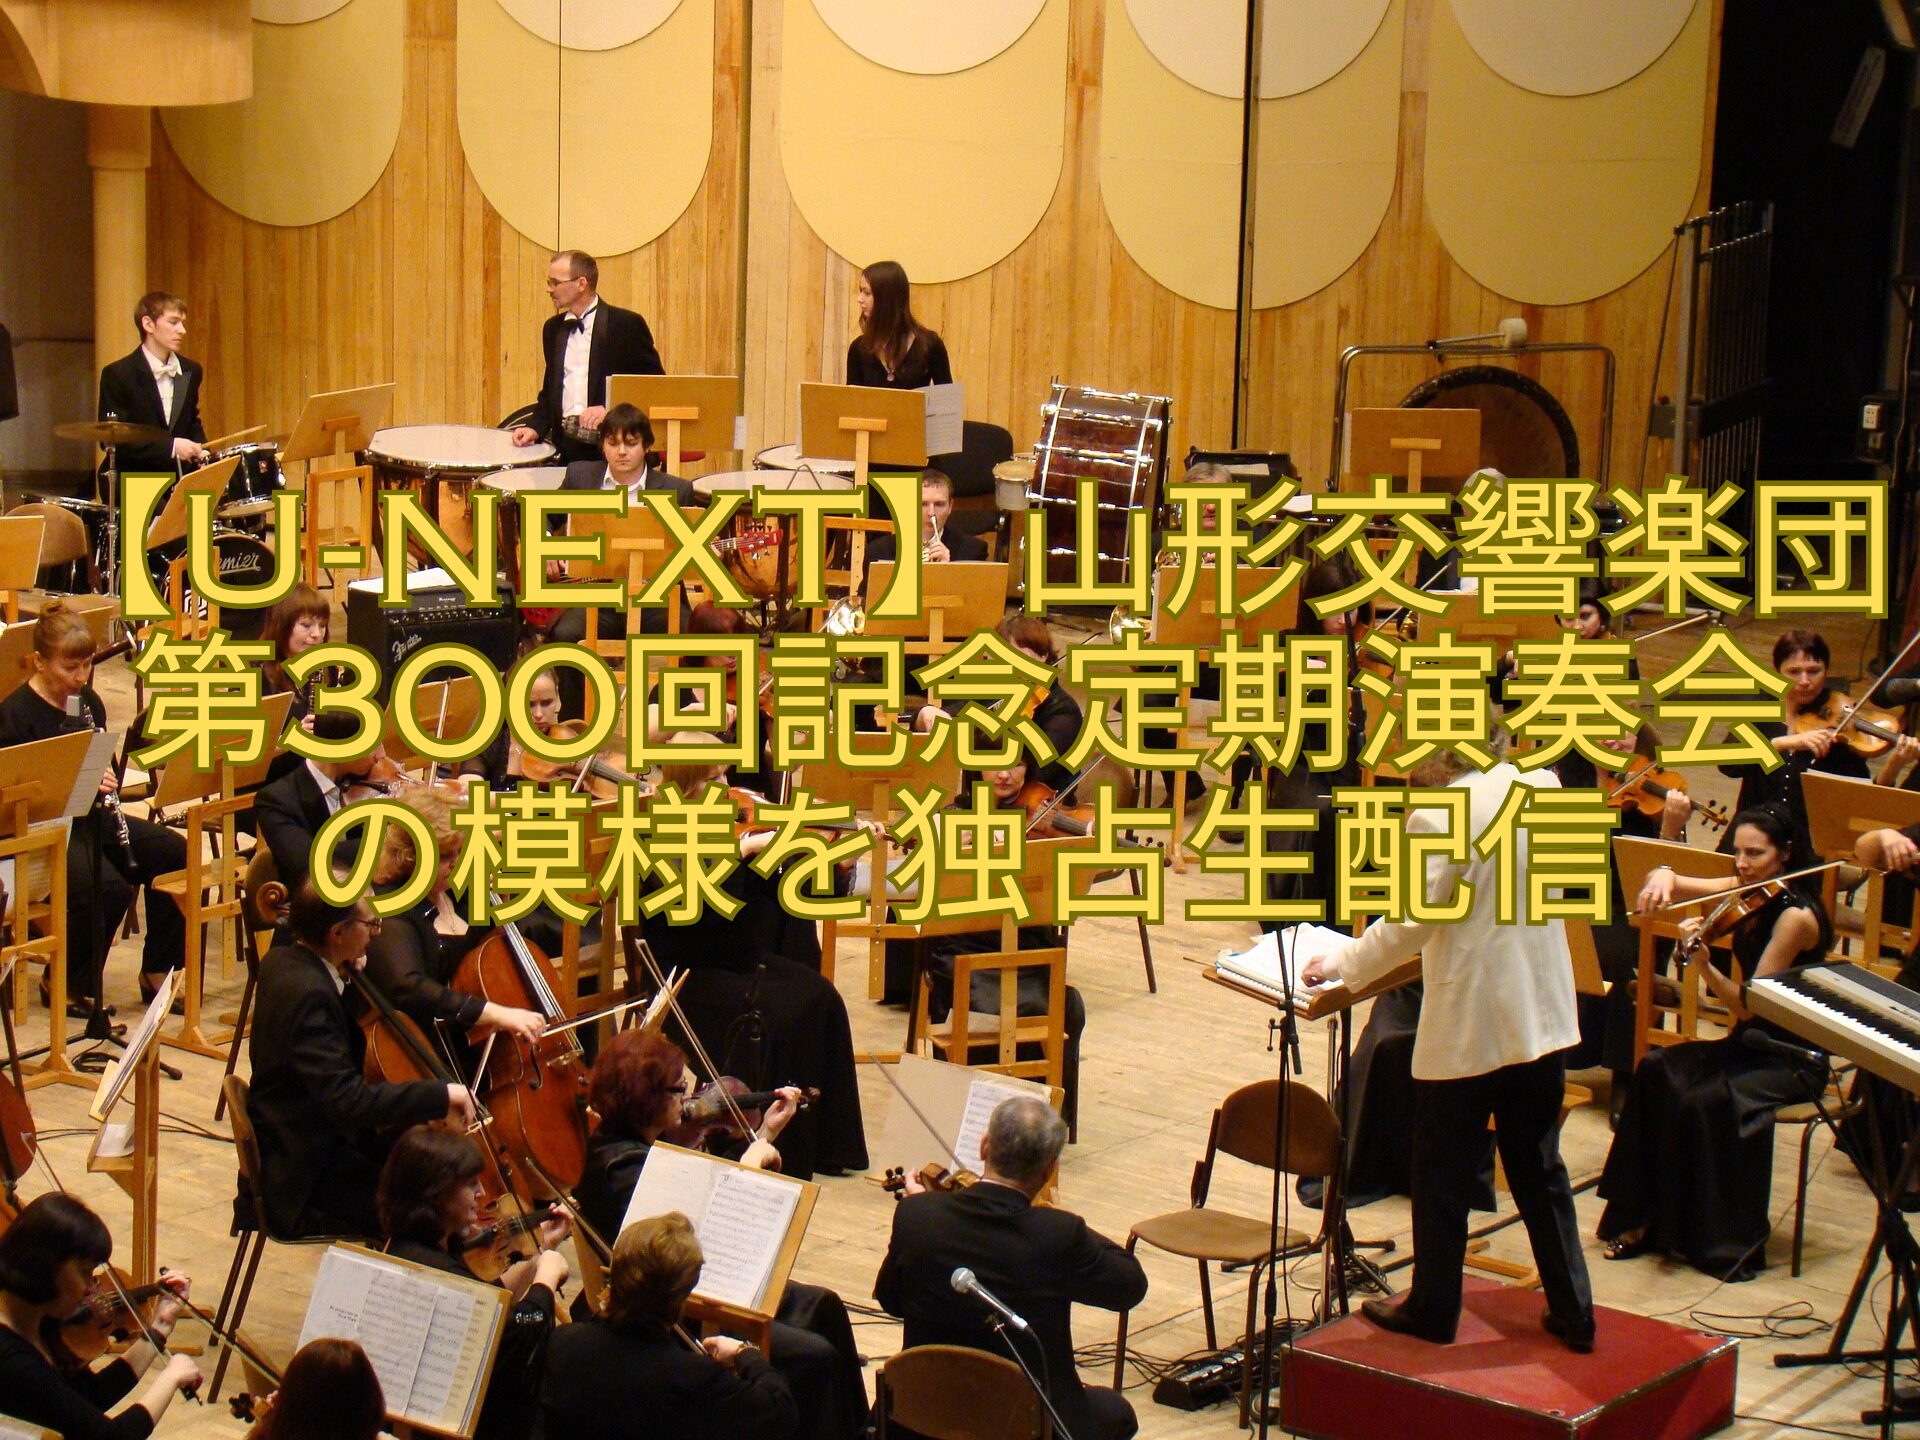 【U-NEXT】山形交響楽団第300回記念定期演奏会-の模様を独占生配信